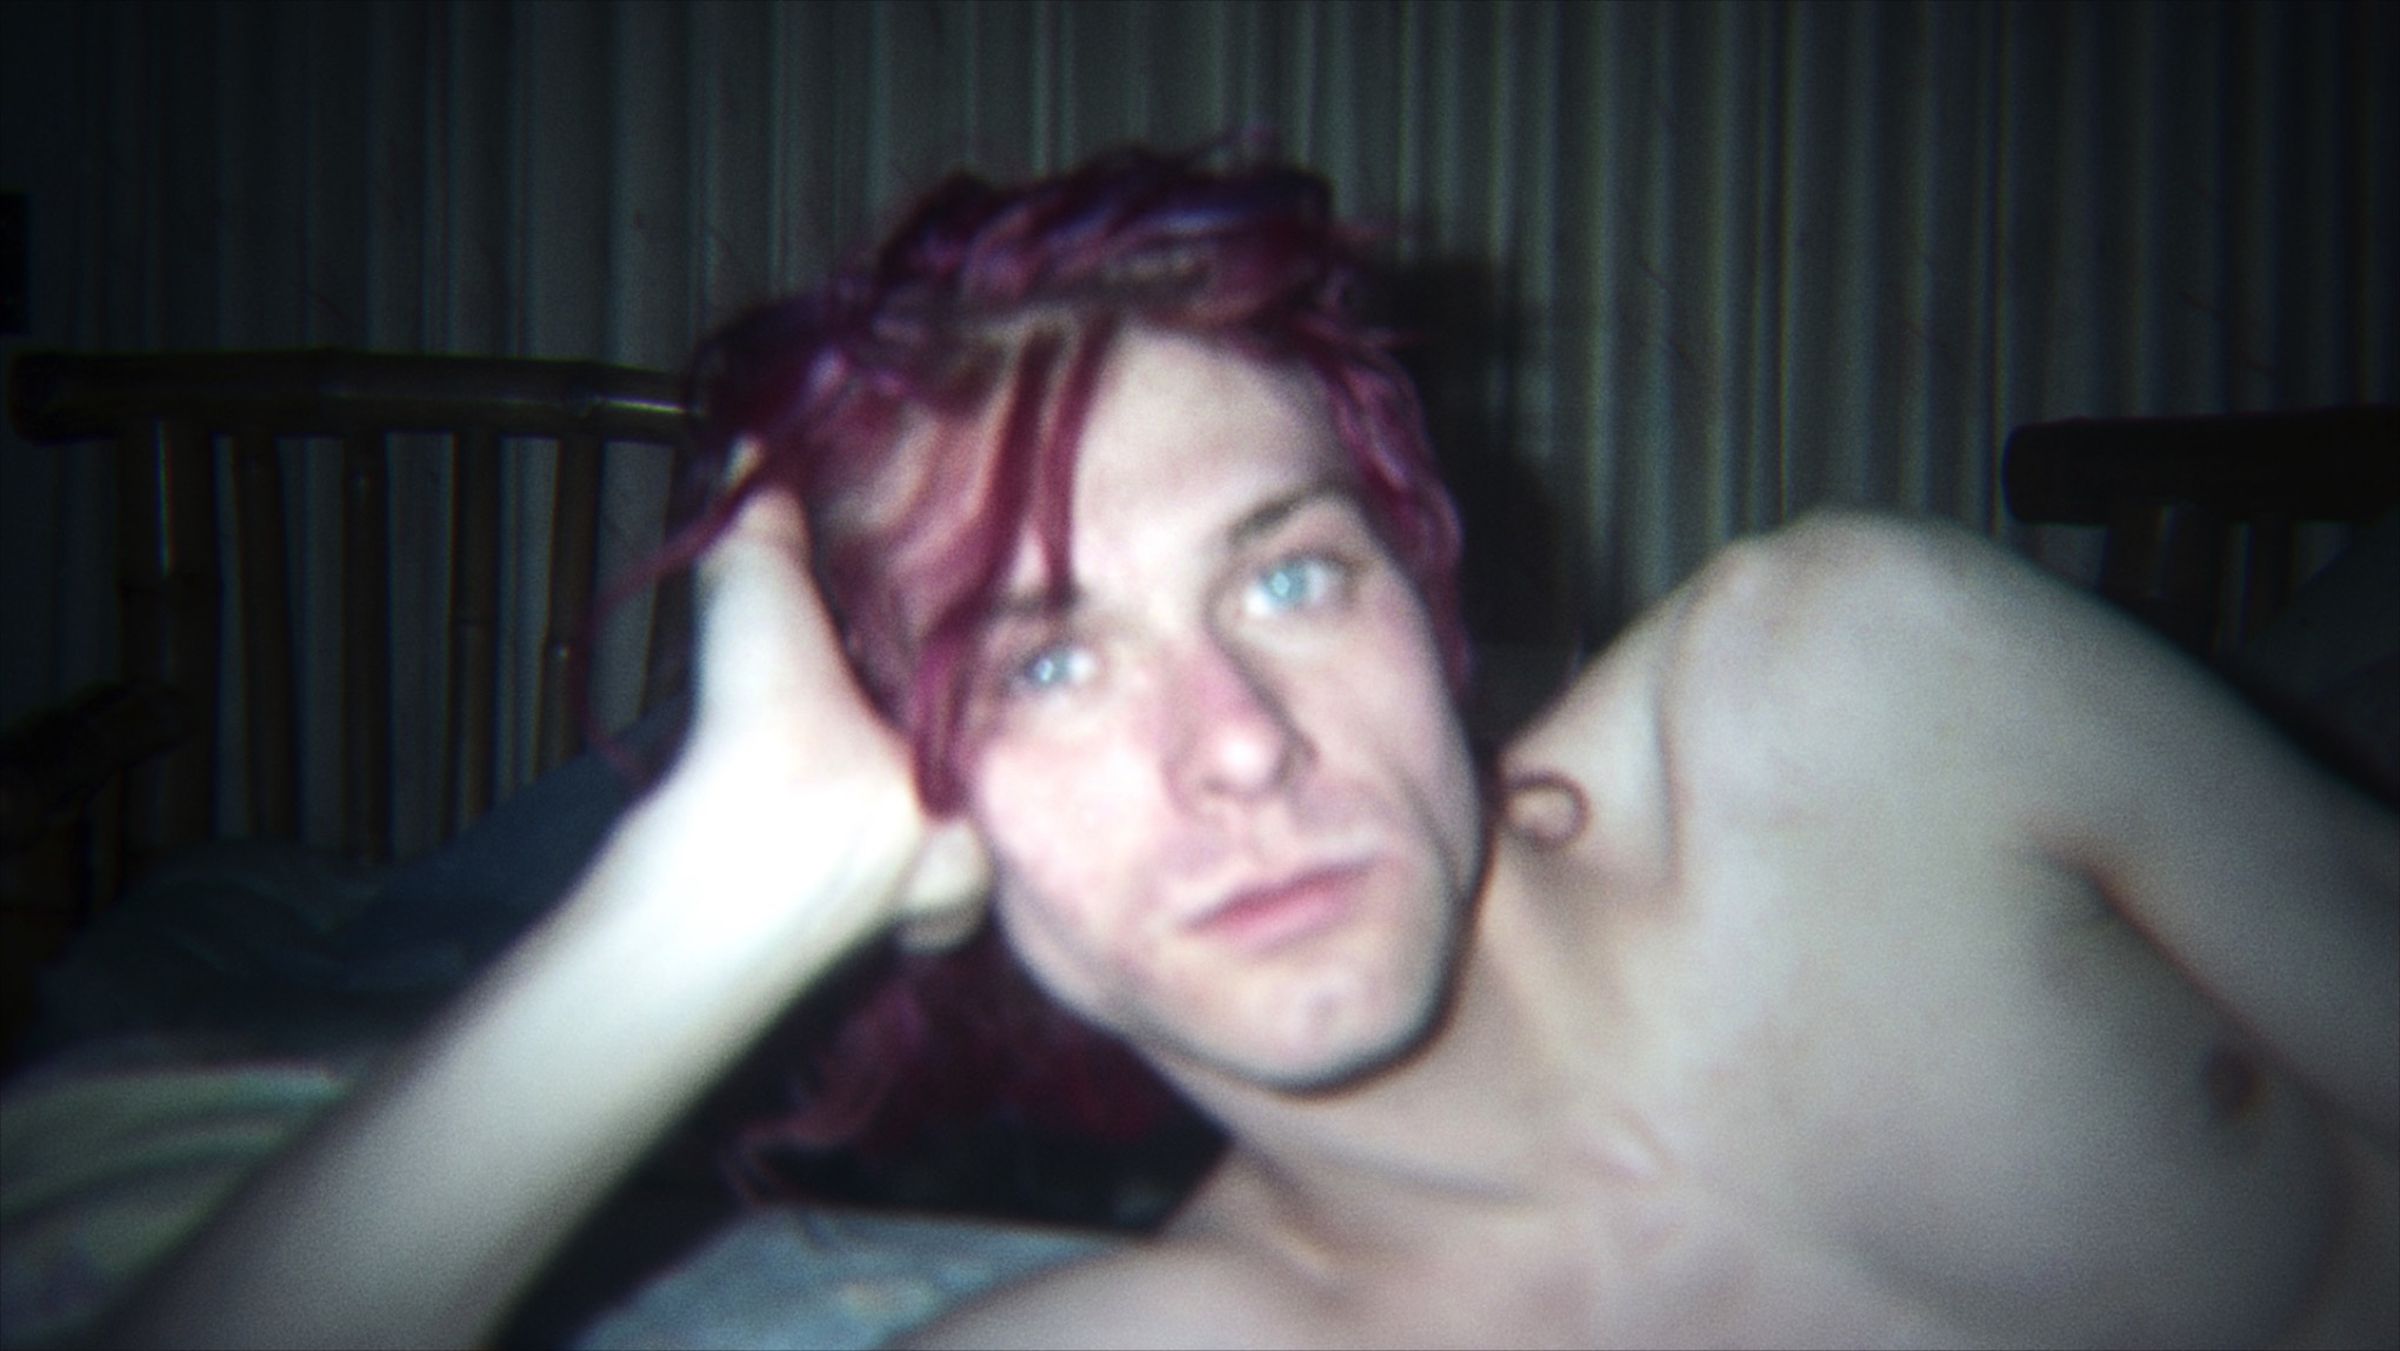 Kurt Cobain: Montage of Heck promotional still